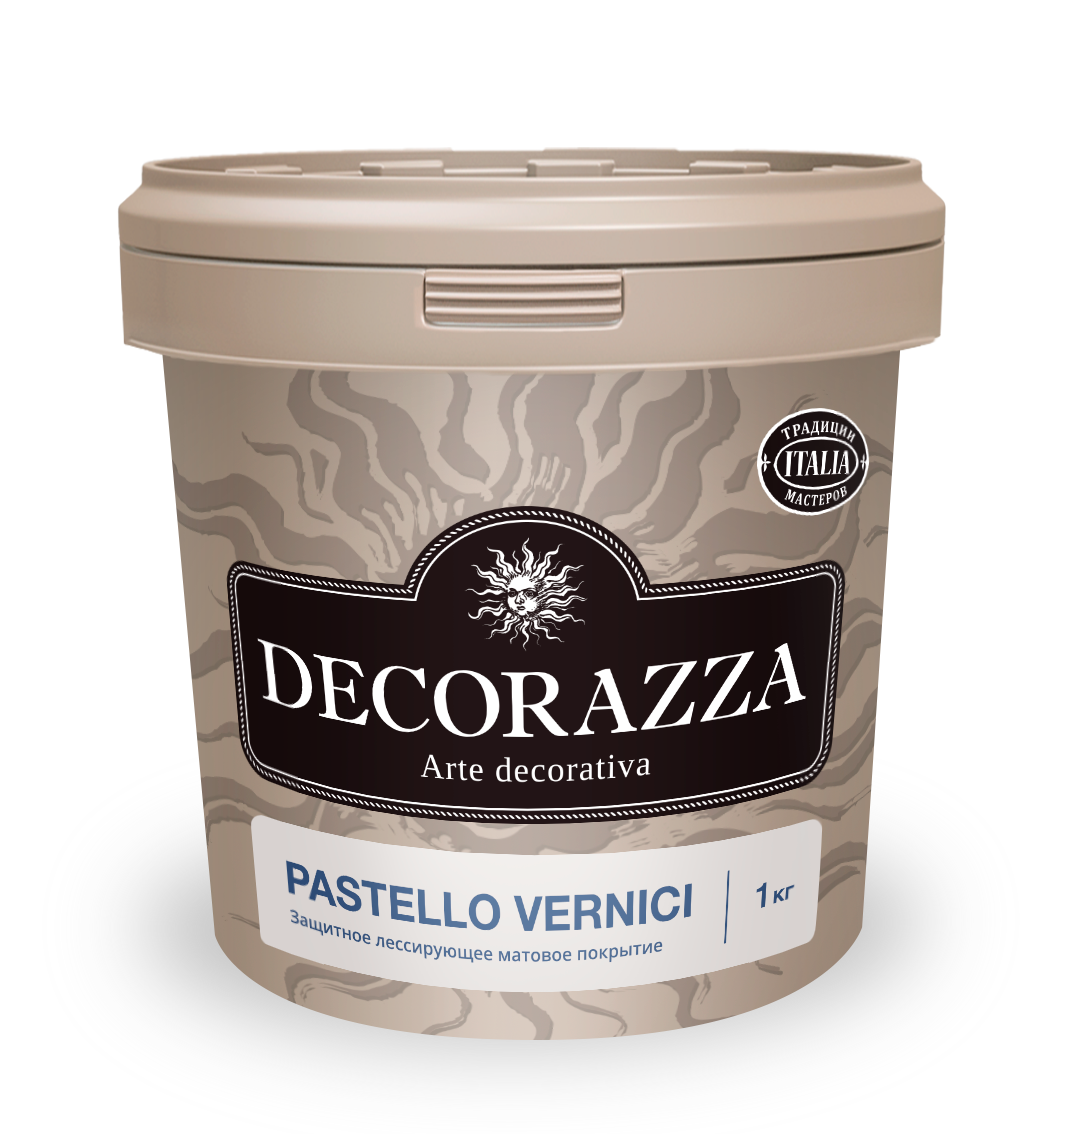 Декоративный финишный лак Decorazza Pastello Vernici PV 001, 1 кг декоративная штукатурка decorazza romano rm 001 14 кг